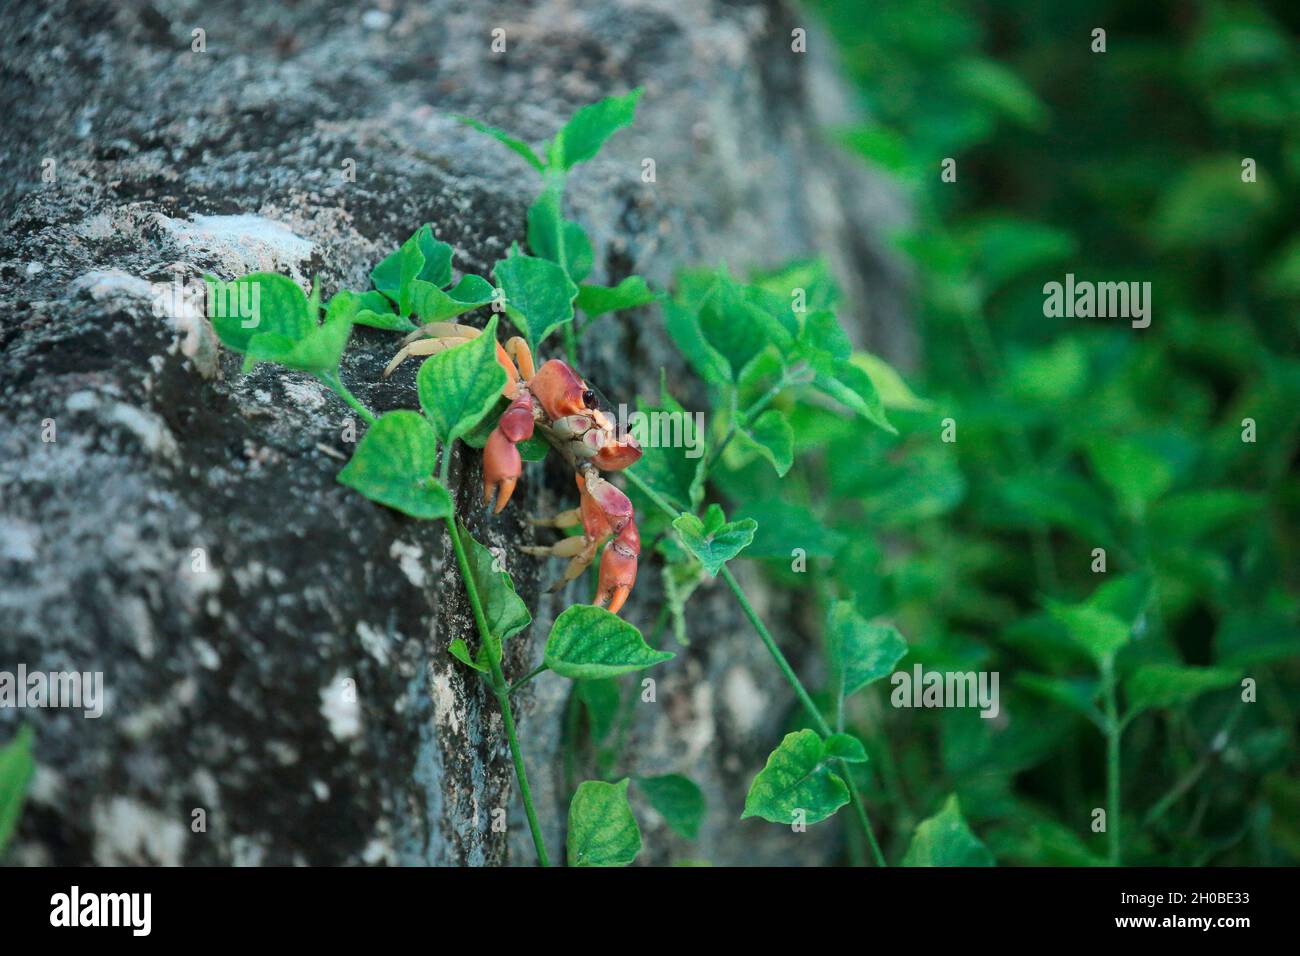 Blackback land crab (Gecarcinus lateralis) in a garden, Cuba Stock Photo